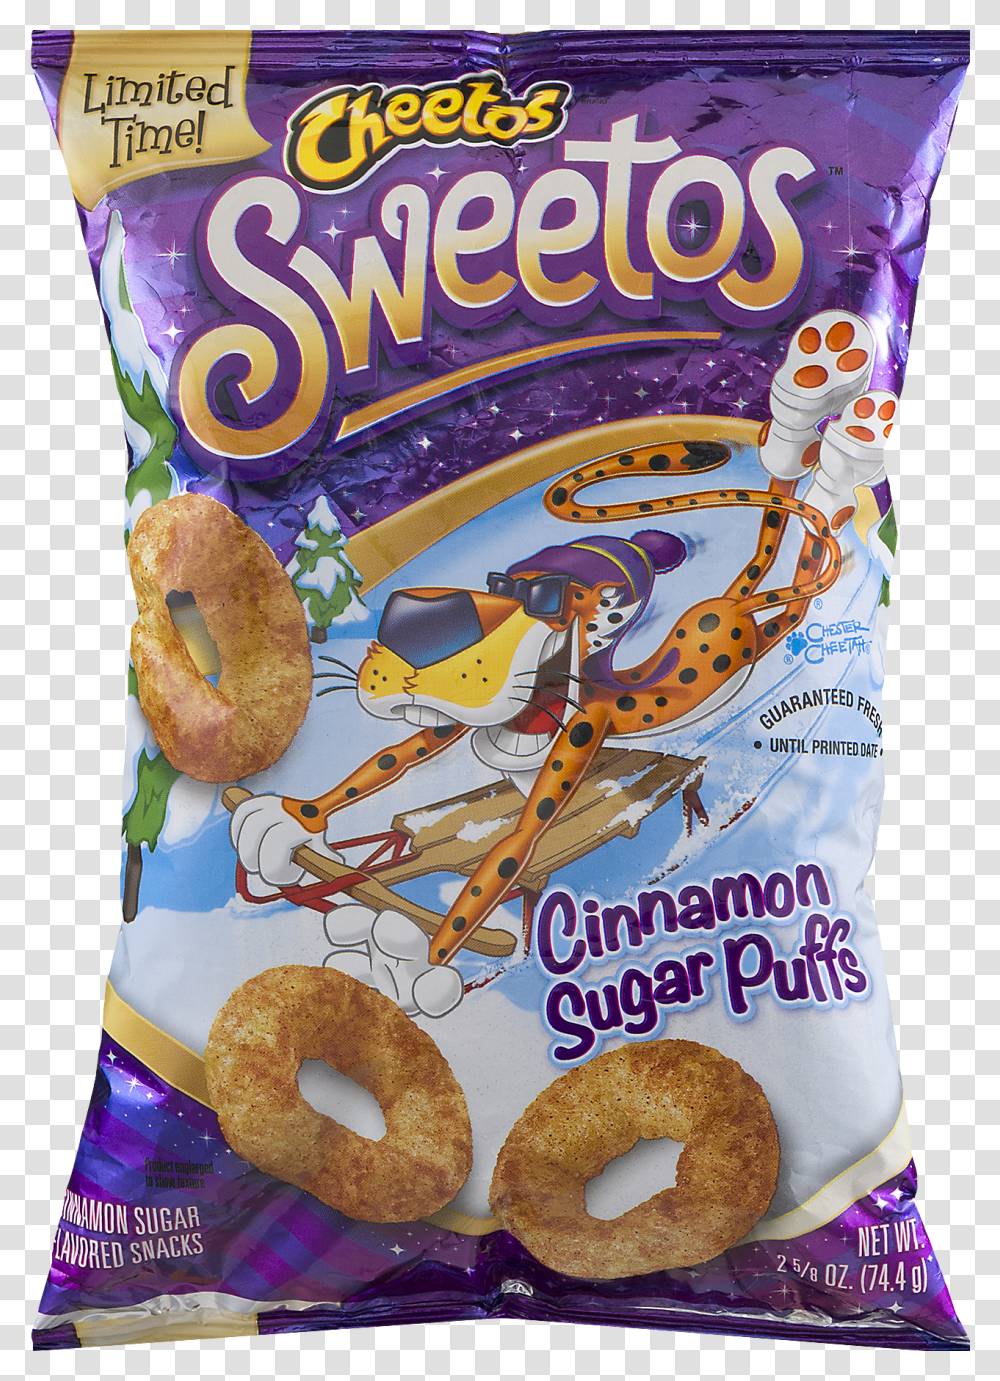 Cheetos Sweetos Cinnamon Sugar Puffs Cinnamon Sugar Cinnamon Sugar Cheetos Sweetos, Bread, Food, Bagel, Sweets Transparent Png